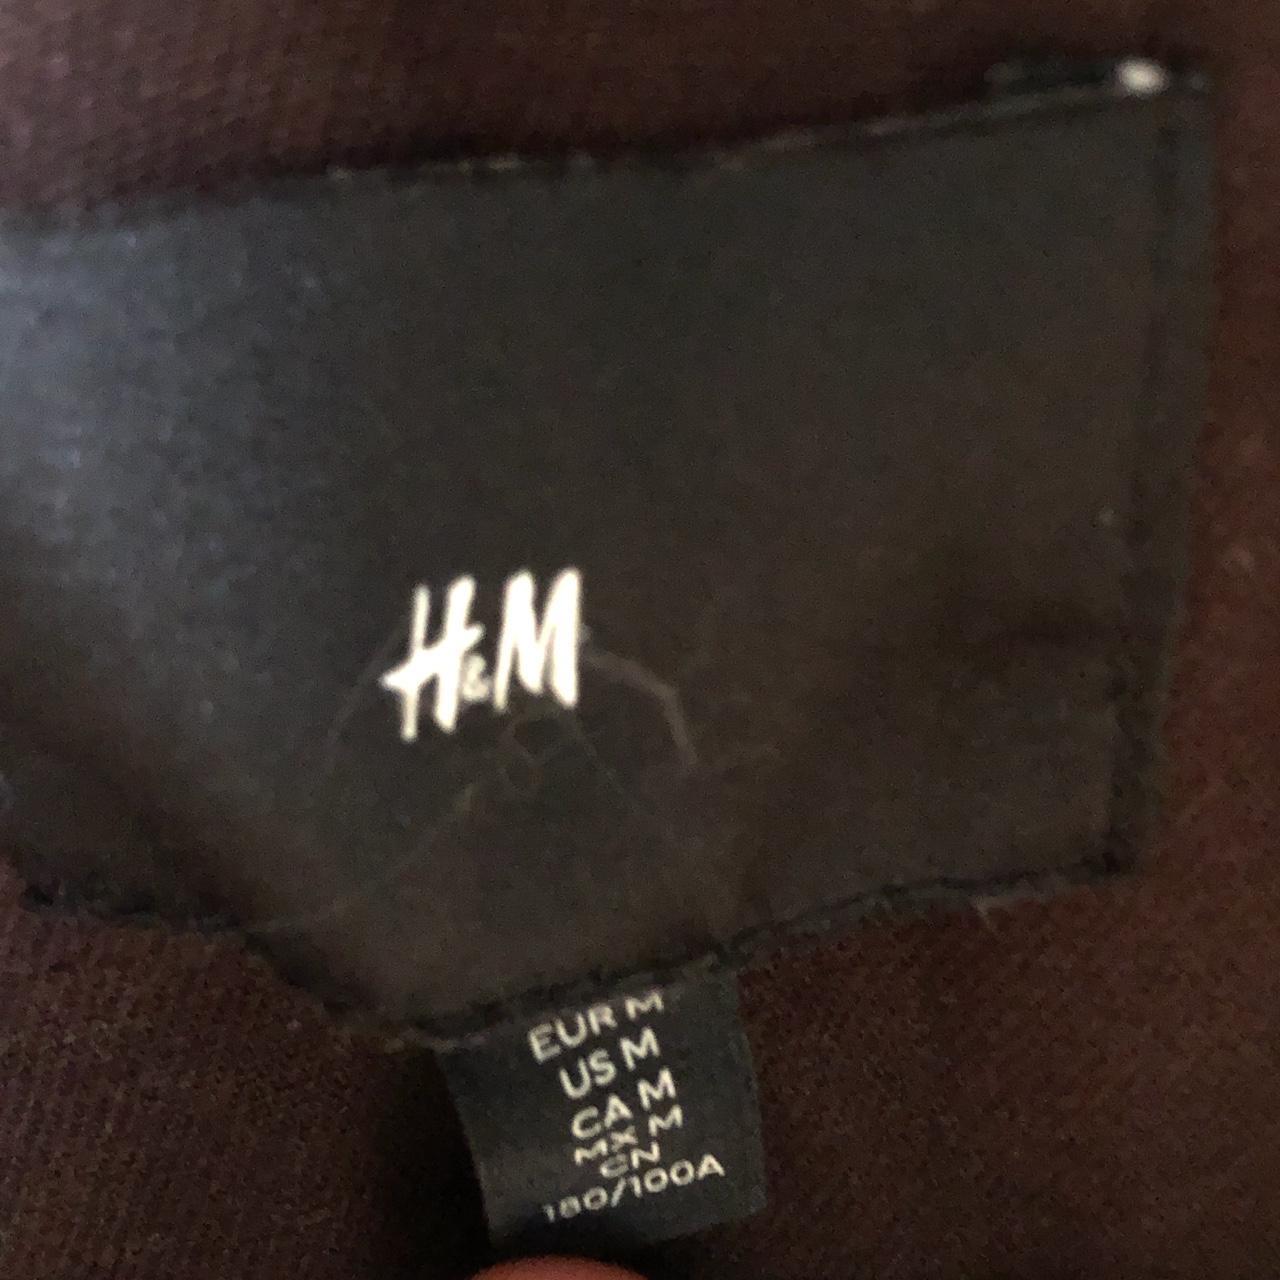 Men’s H&M brown jacket, size M. Barely worn! - Depop